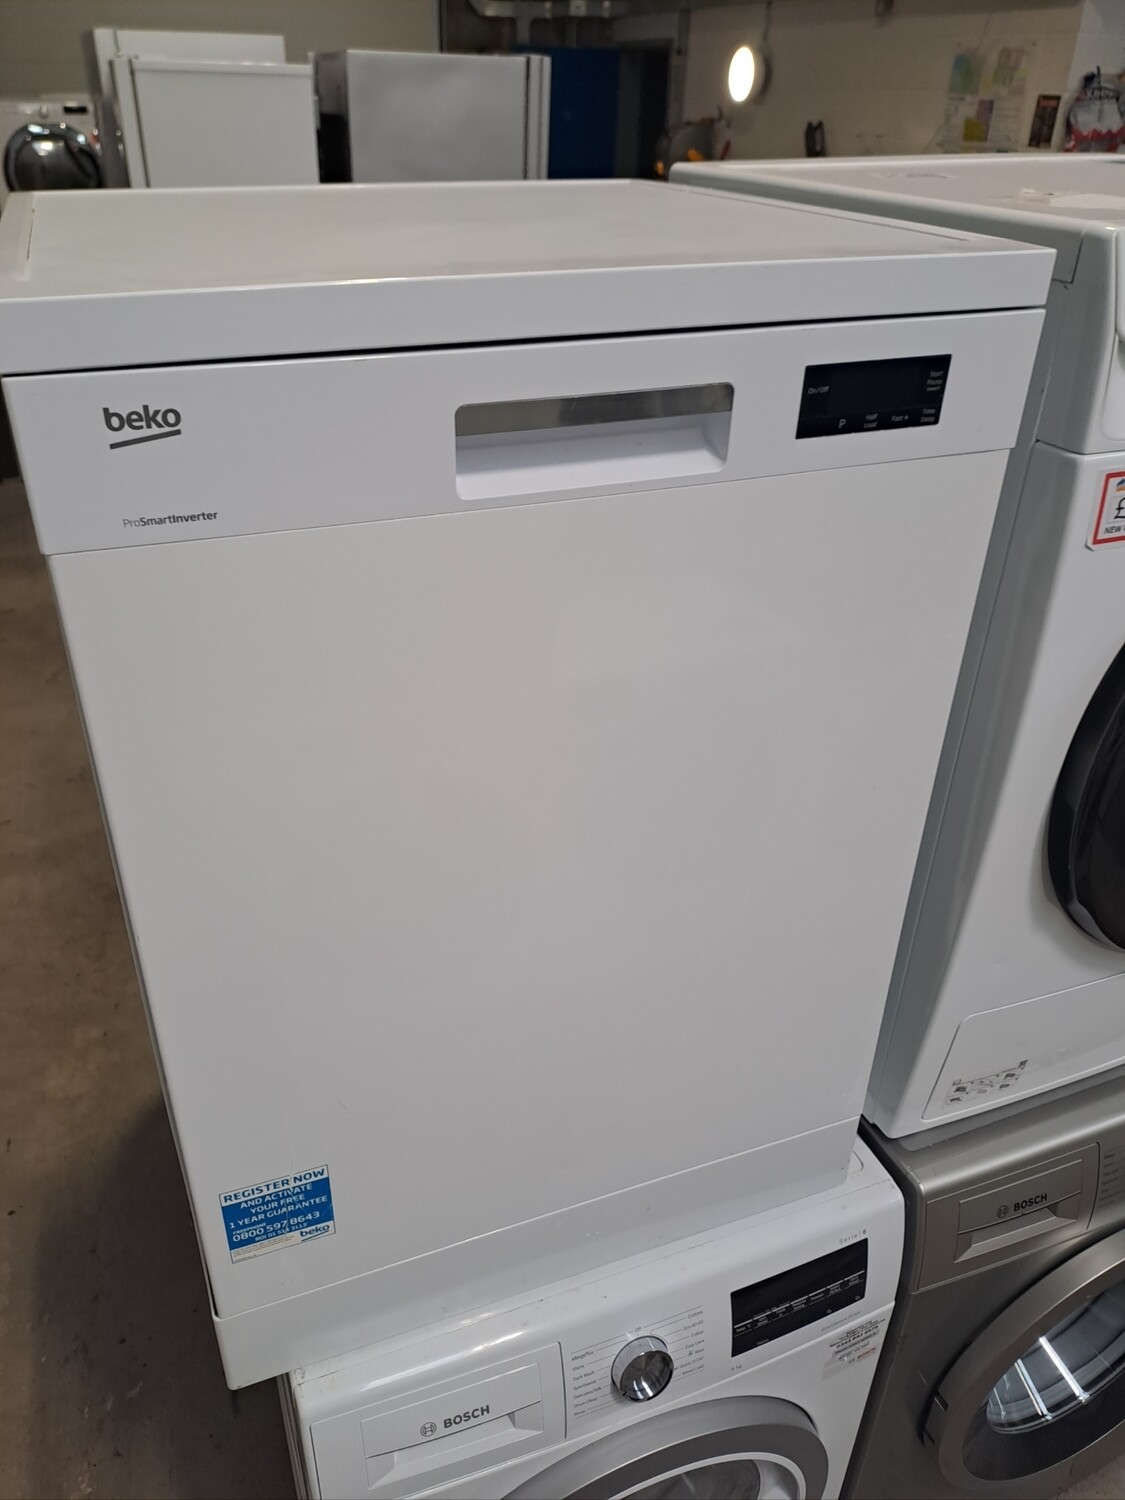 Beko DFN16420W 60cm Freestanding Full Size Dishwasher White - Refurbished + 6 Months Guarantee 